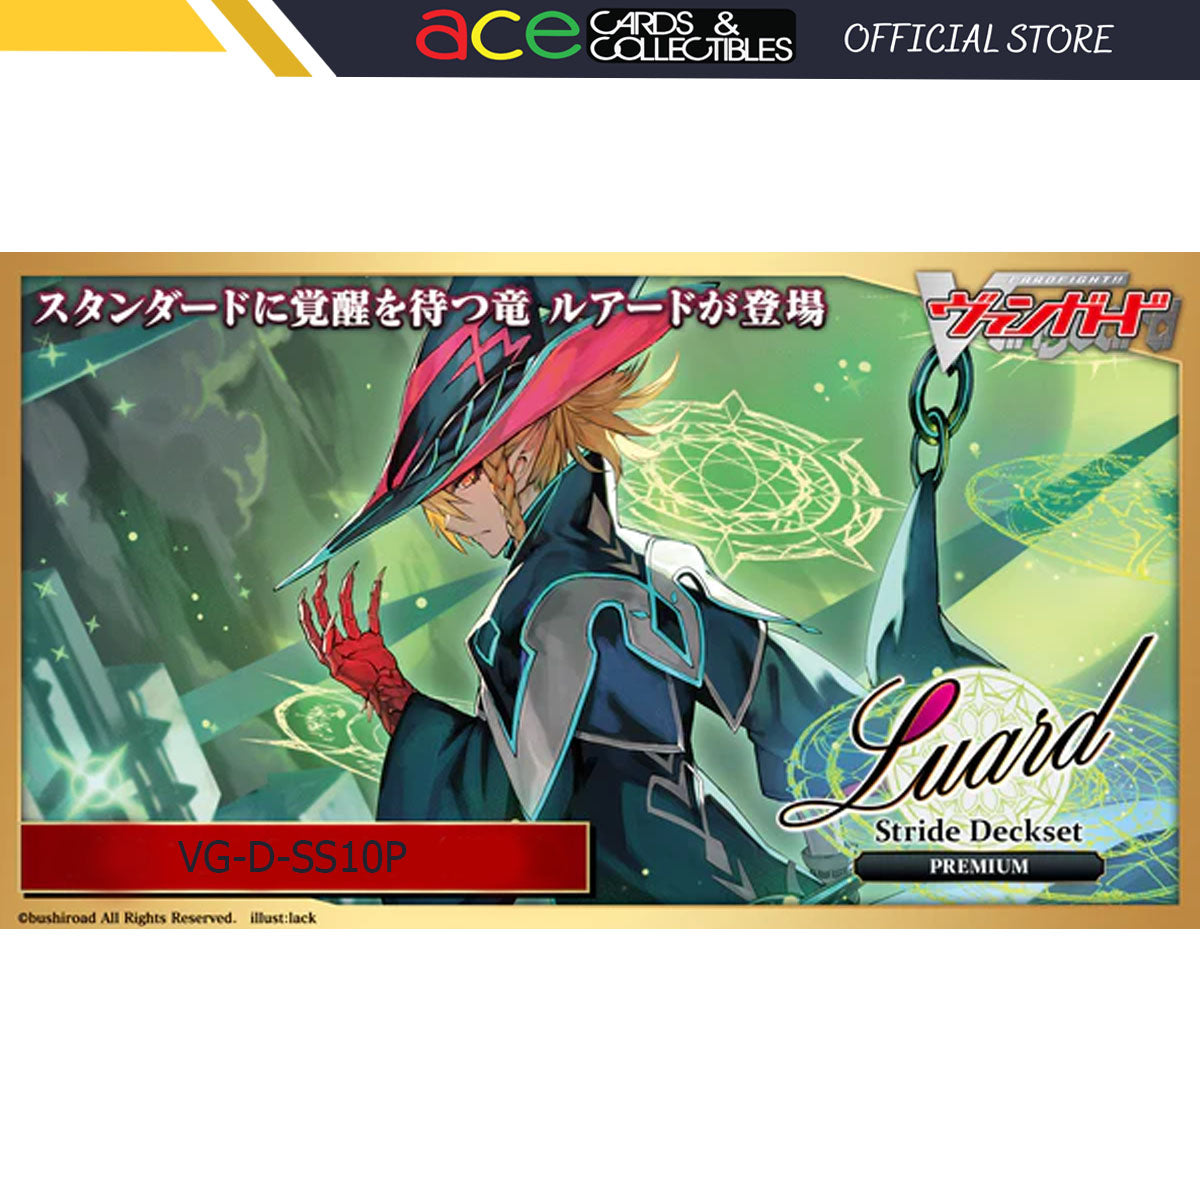 Cardfight!! Vanguard OverDress Special Series Vol. 10 "Stride Deckset Luard PREMIUM" [VG-D-SS10P] (Japanese)-Bushiroad-Ace Cards & Collectibles